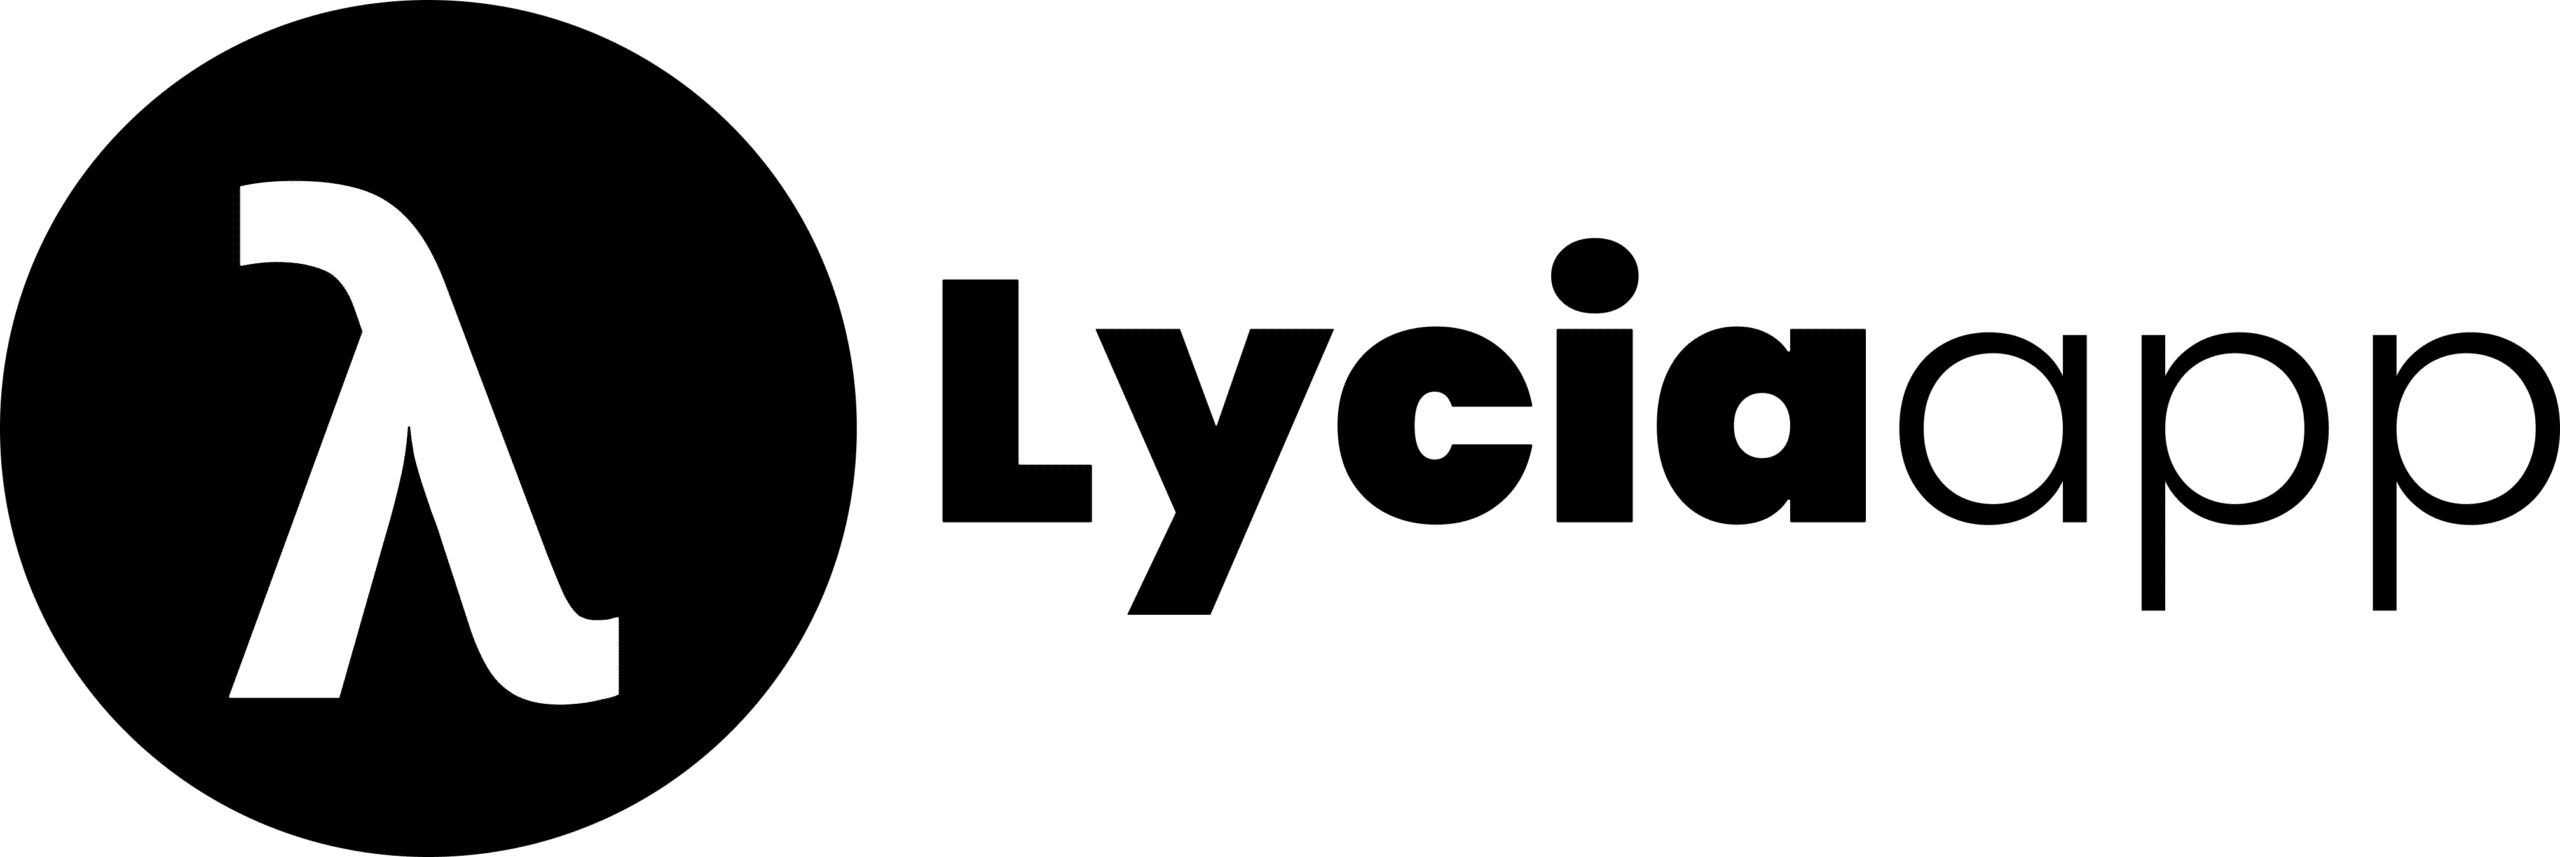 lycia-app-logo